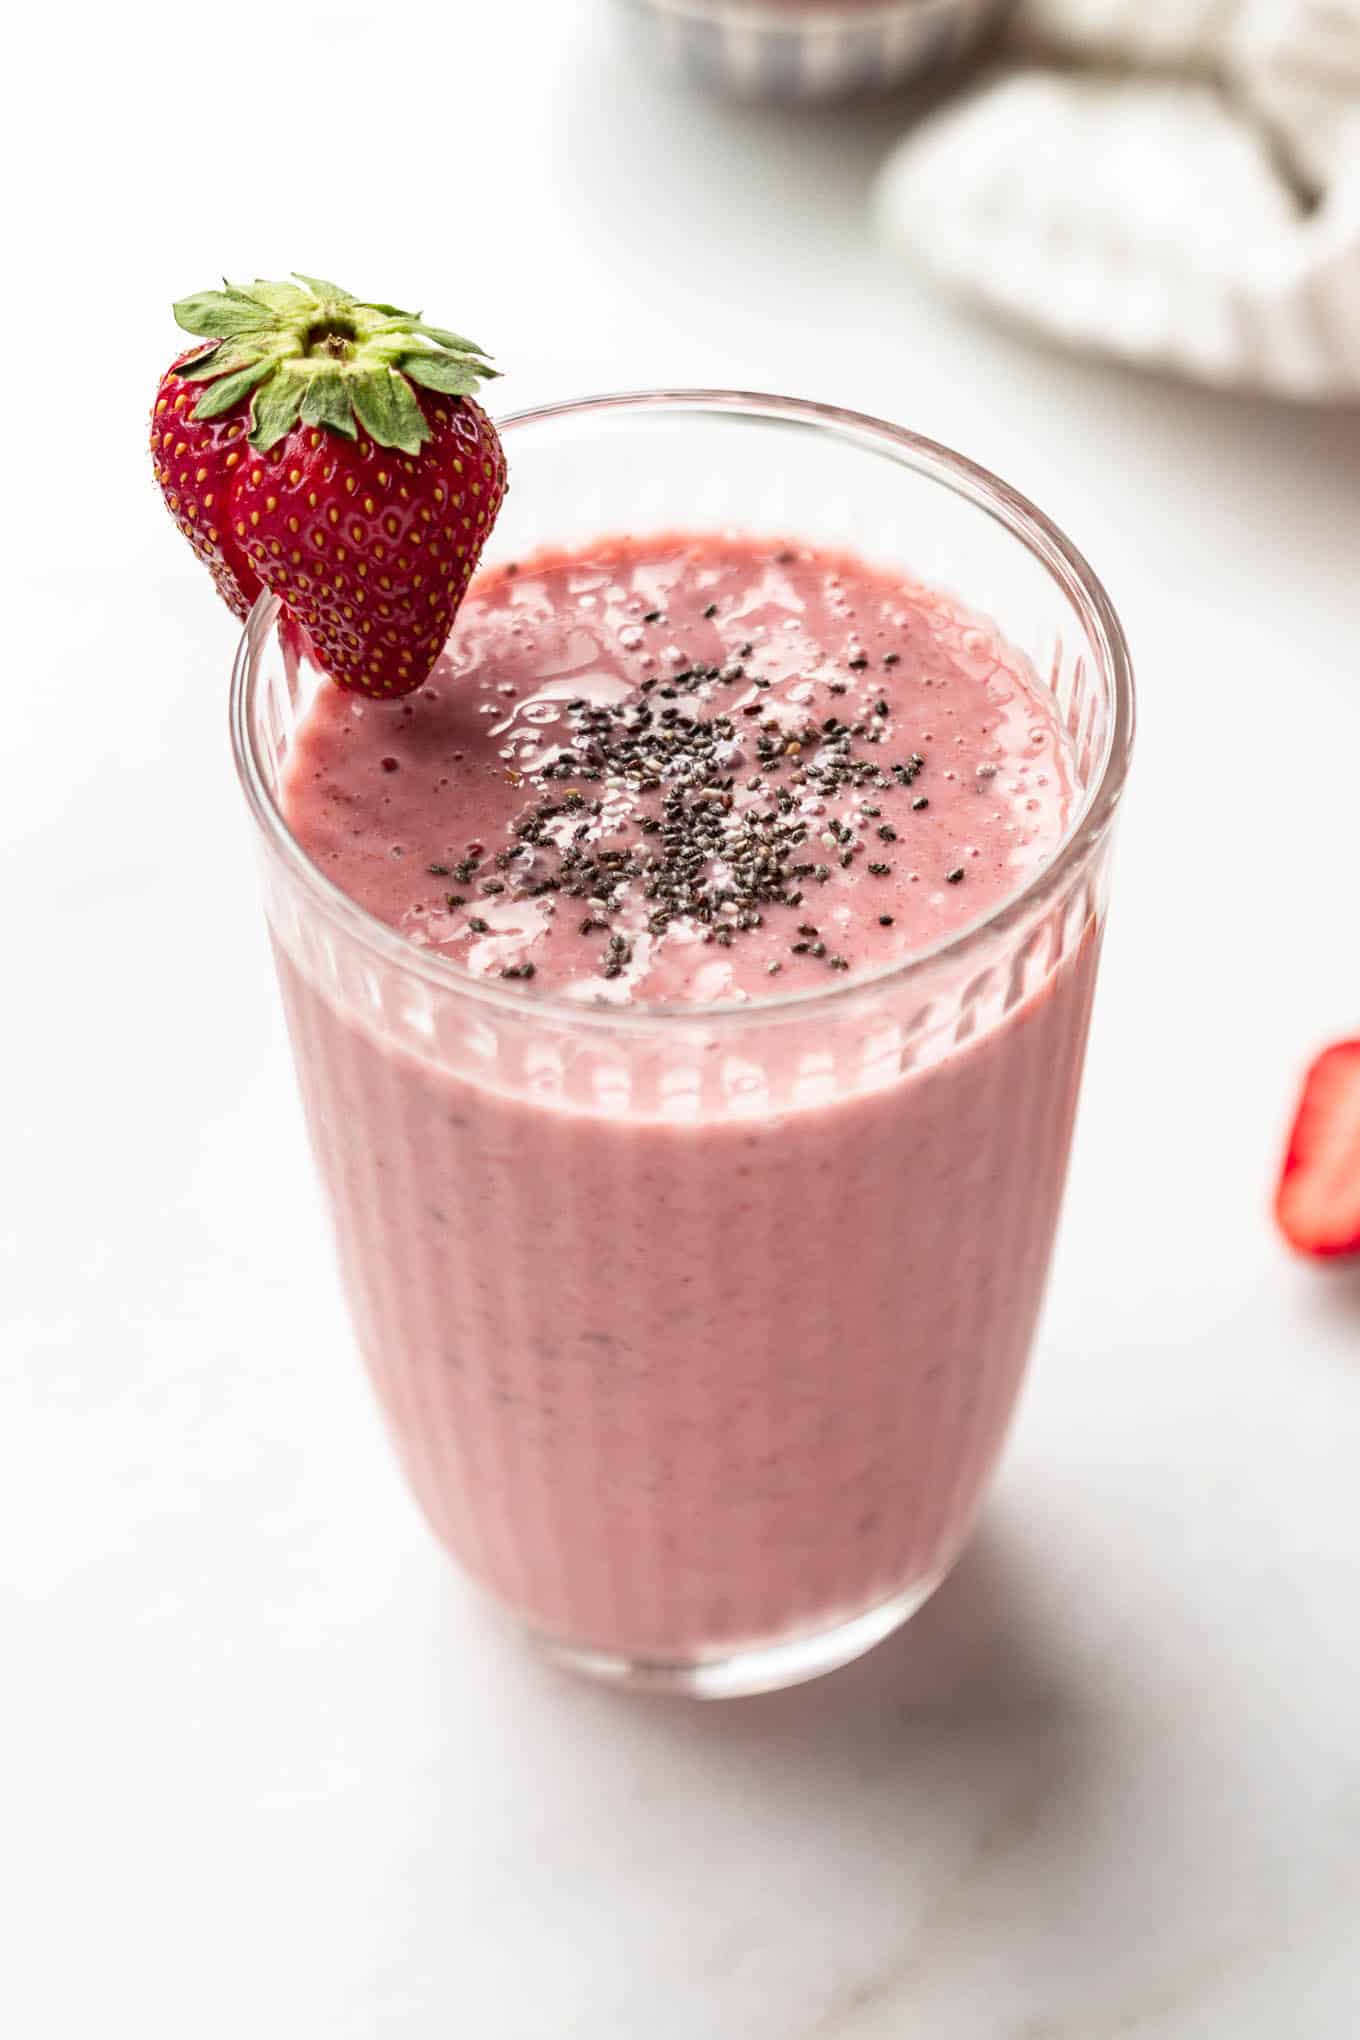 Strawberry Smoothie (5 ingredients!) - Choosing Chia